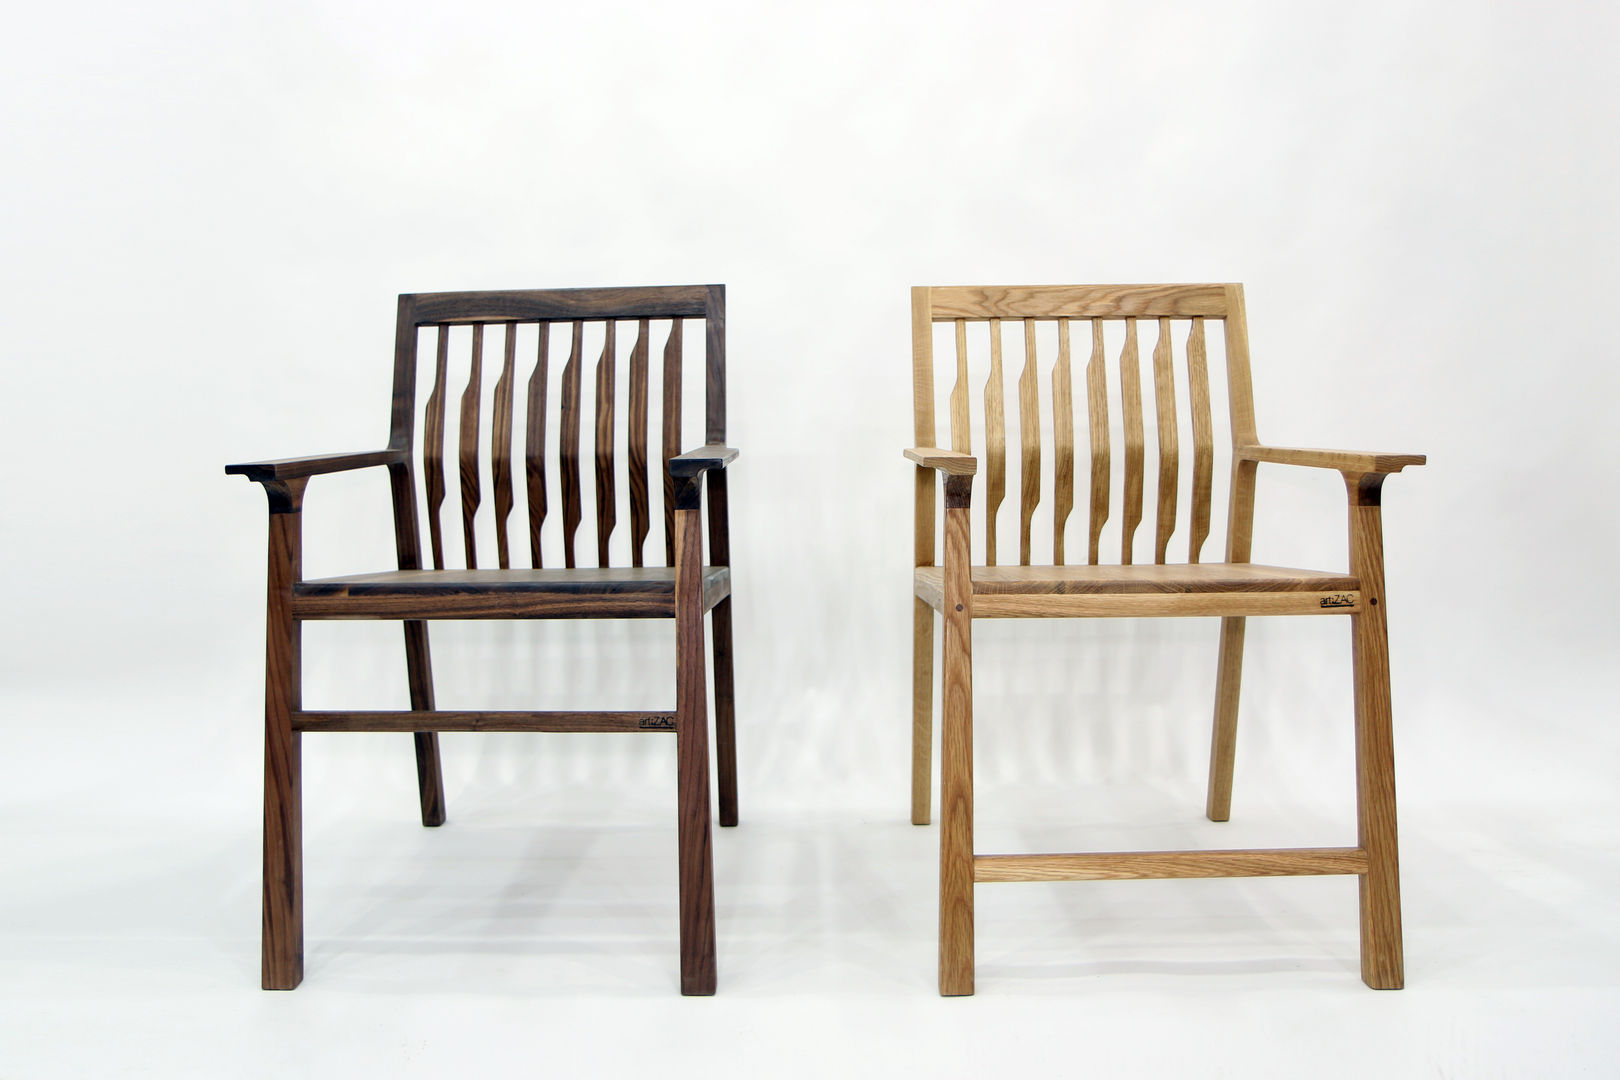 Kinetic Line_Arm Chair, ARTIZAC ARTIZAC 書房/辦公室 椅子